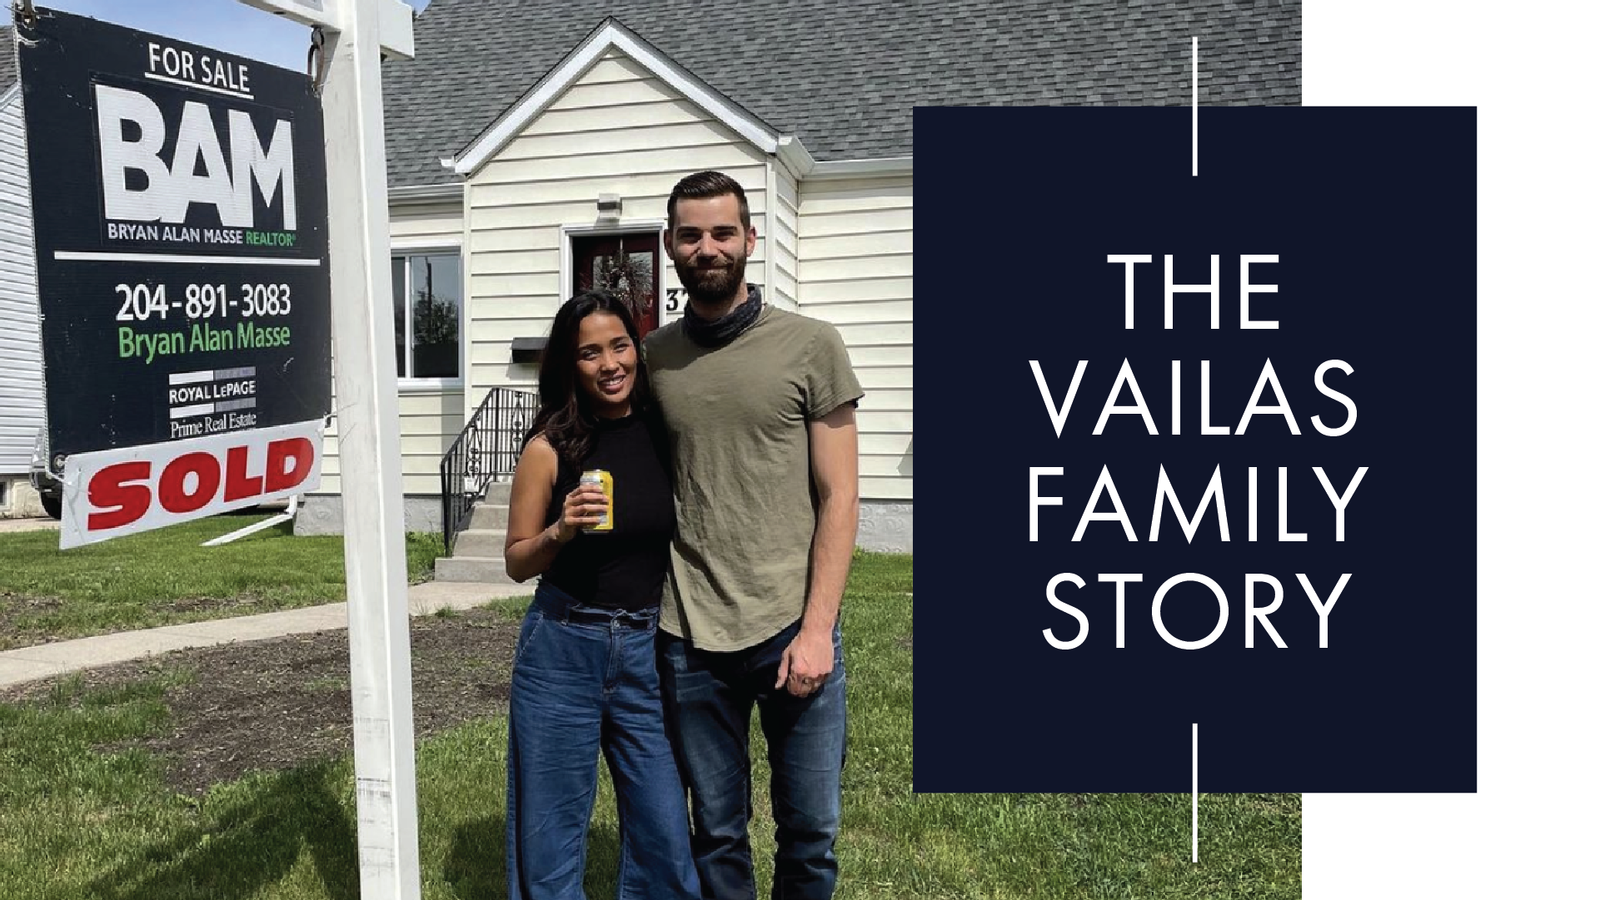 The Vailas Family Story